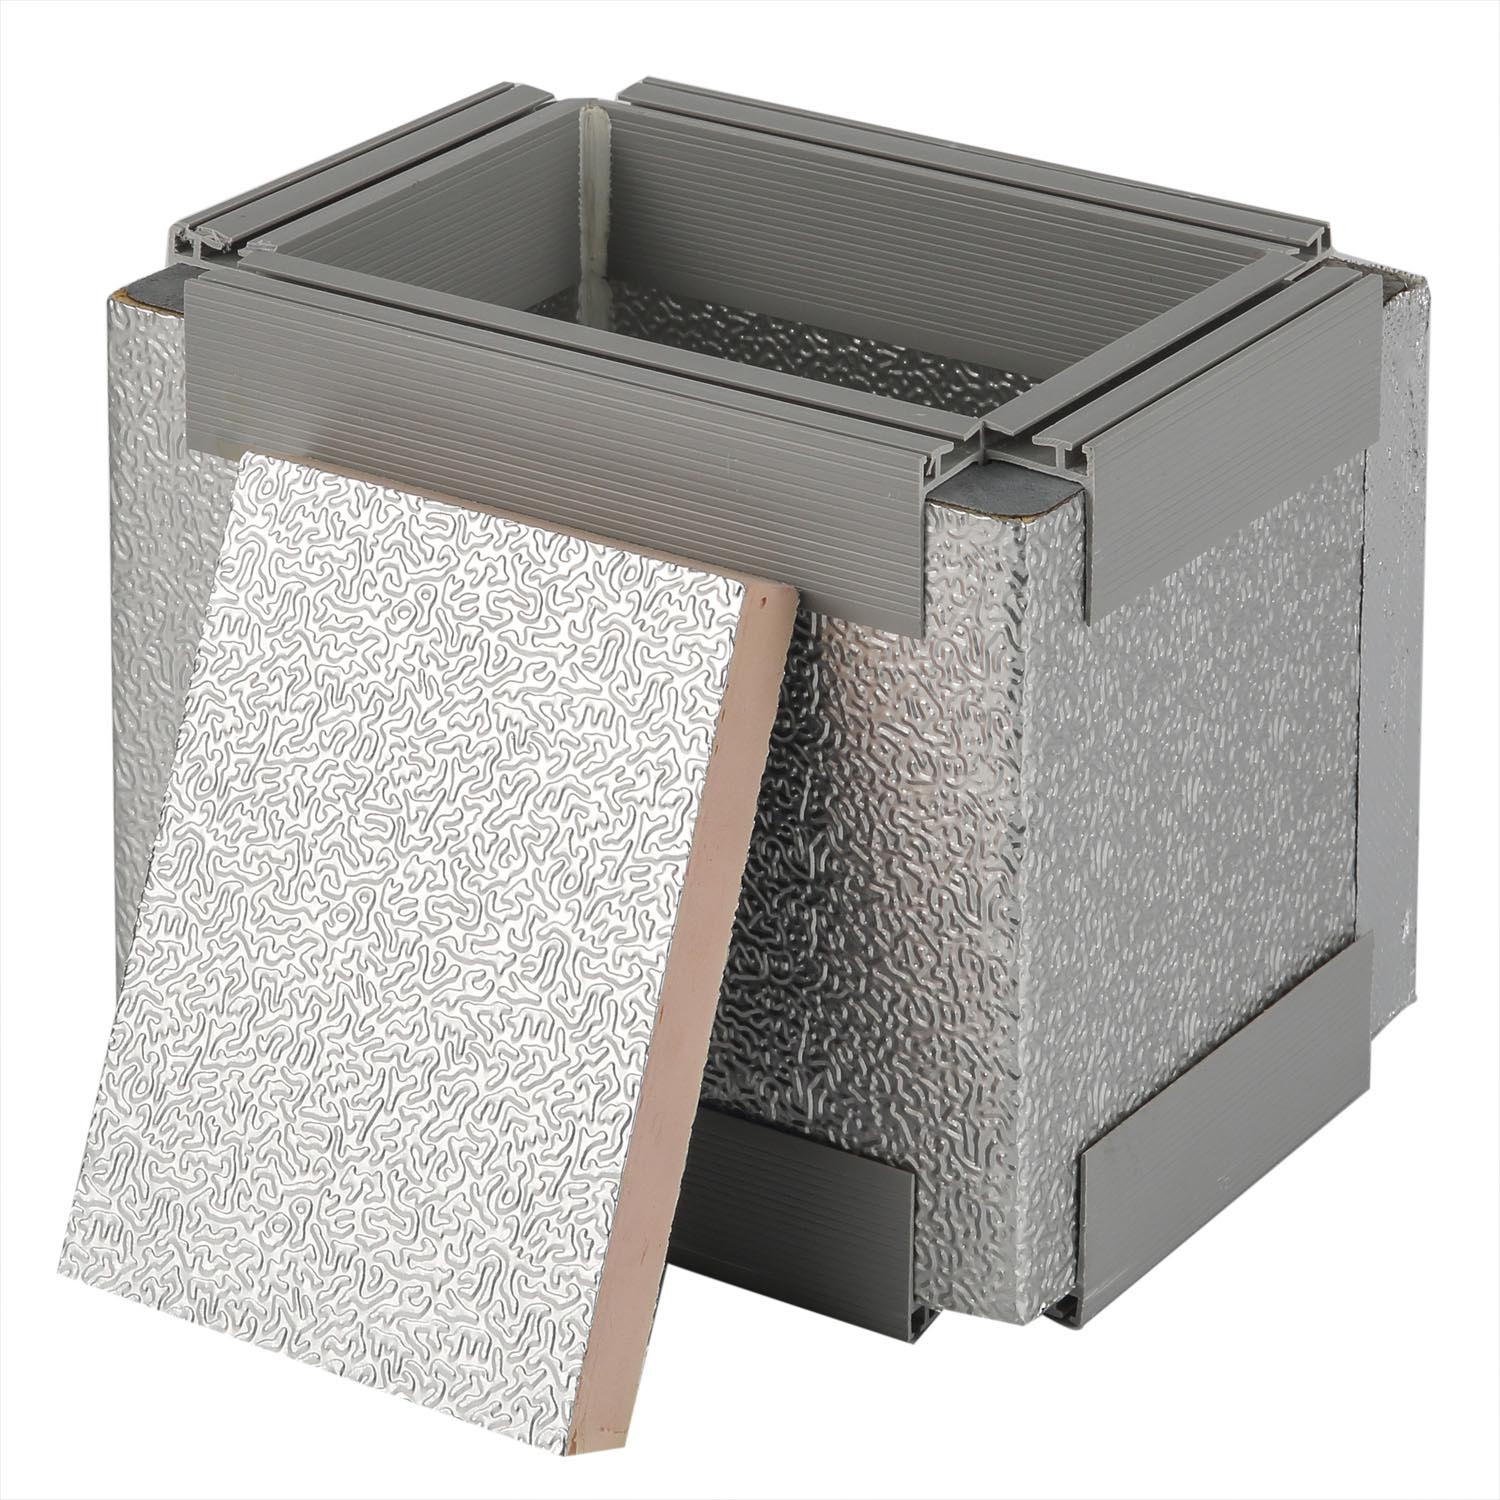 Black Aluminum Foil Foam Laminated Phenolic Insulation Board